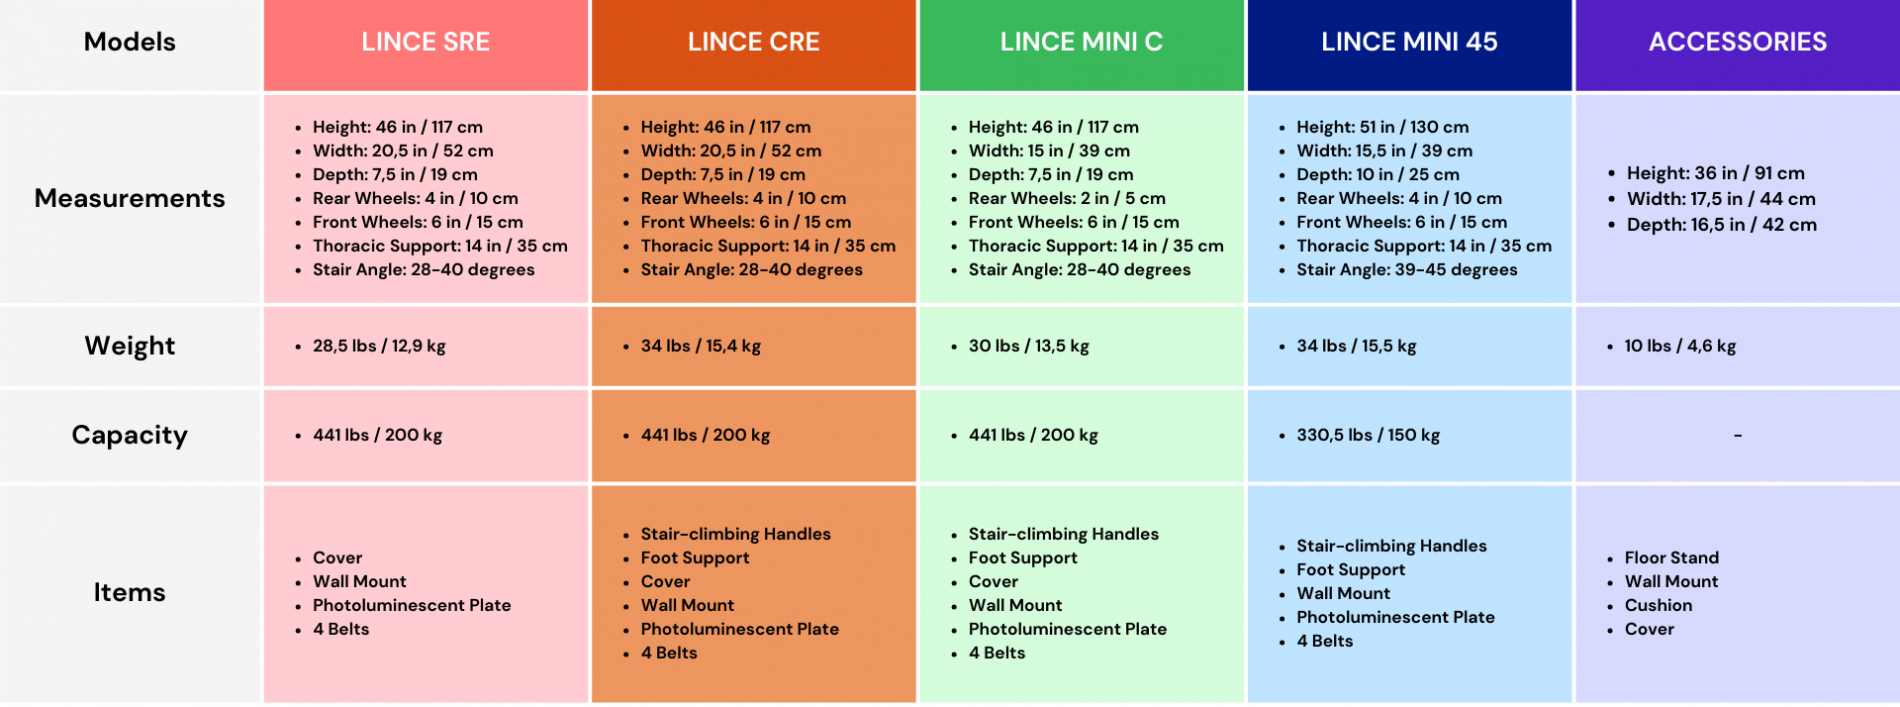 Lince Models